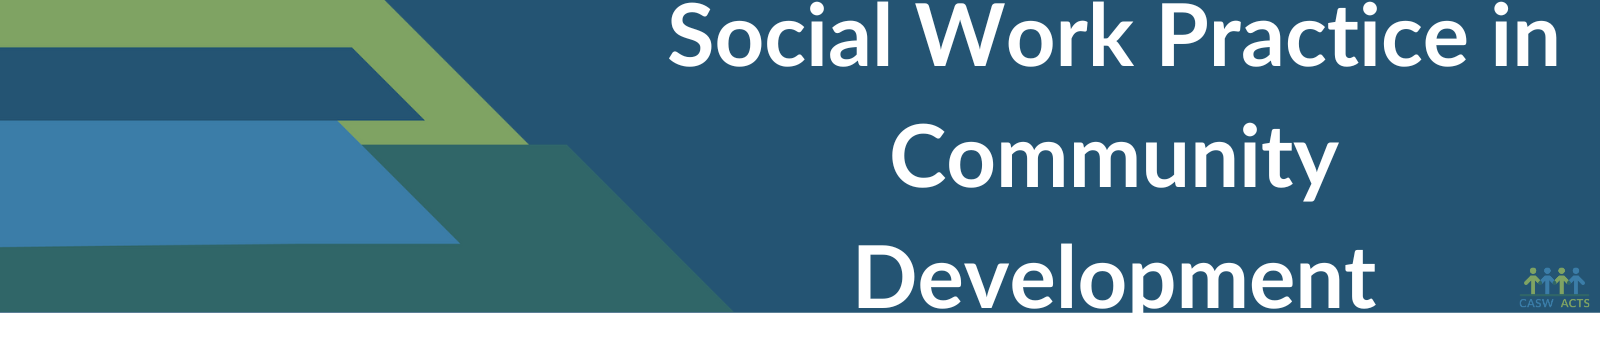 Social Work Practice in Community Development | Canadian Association of ...